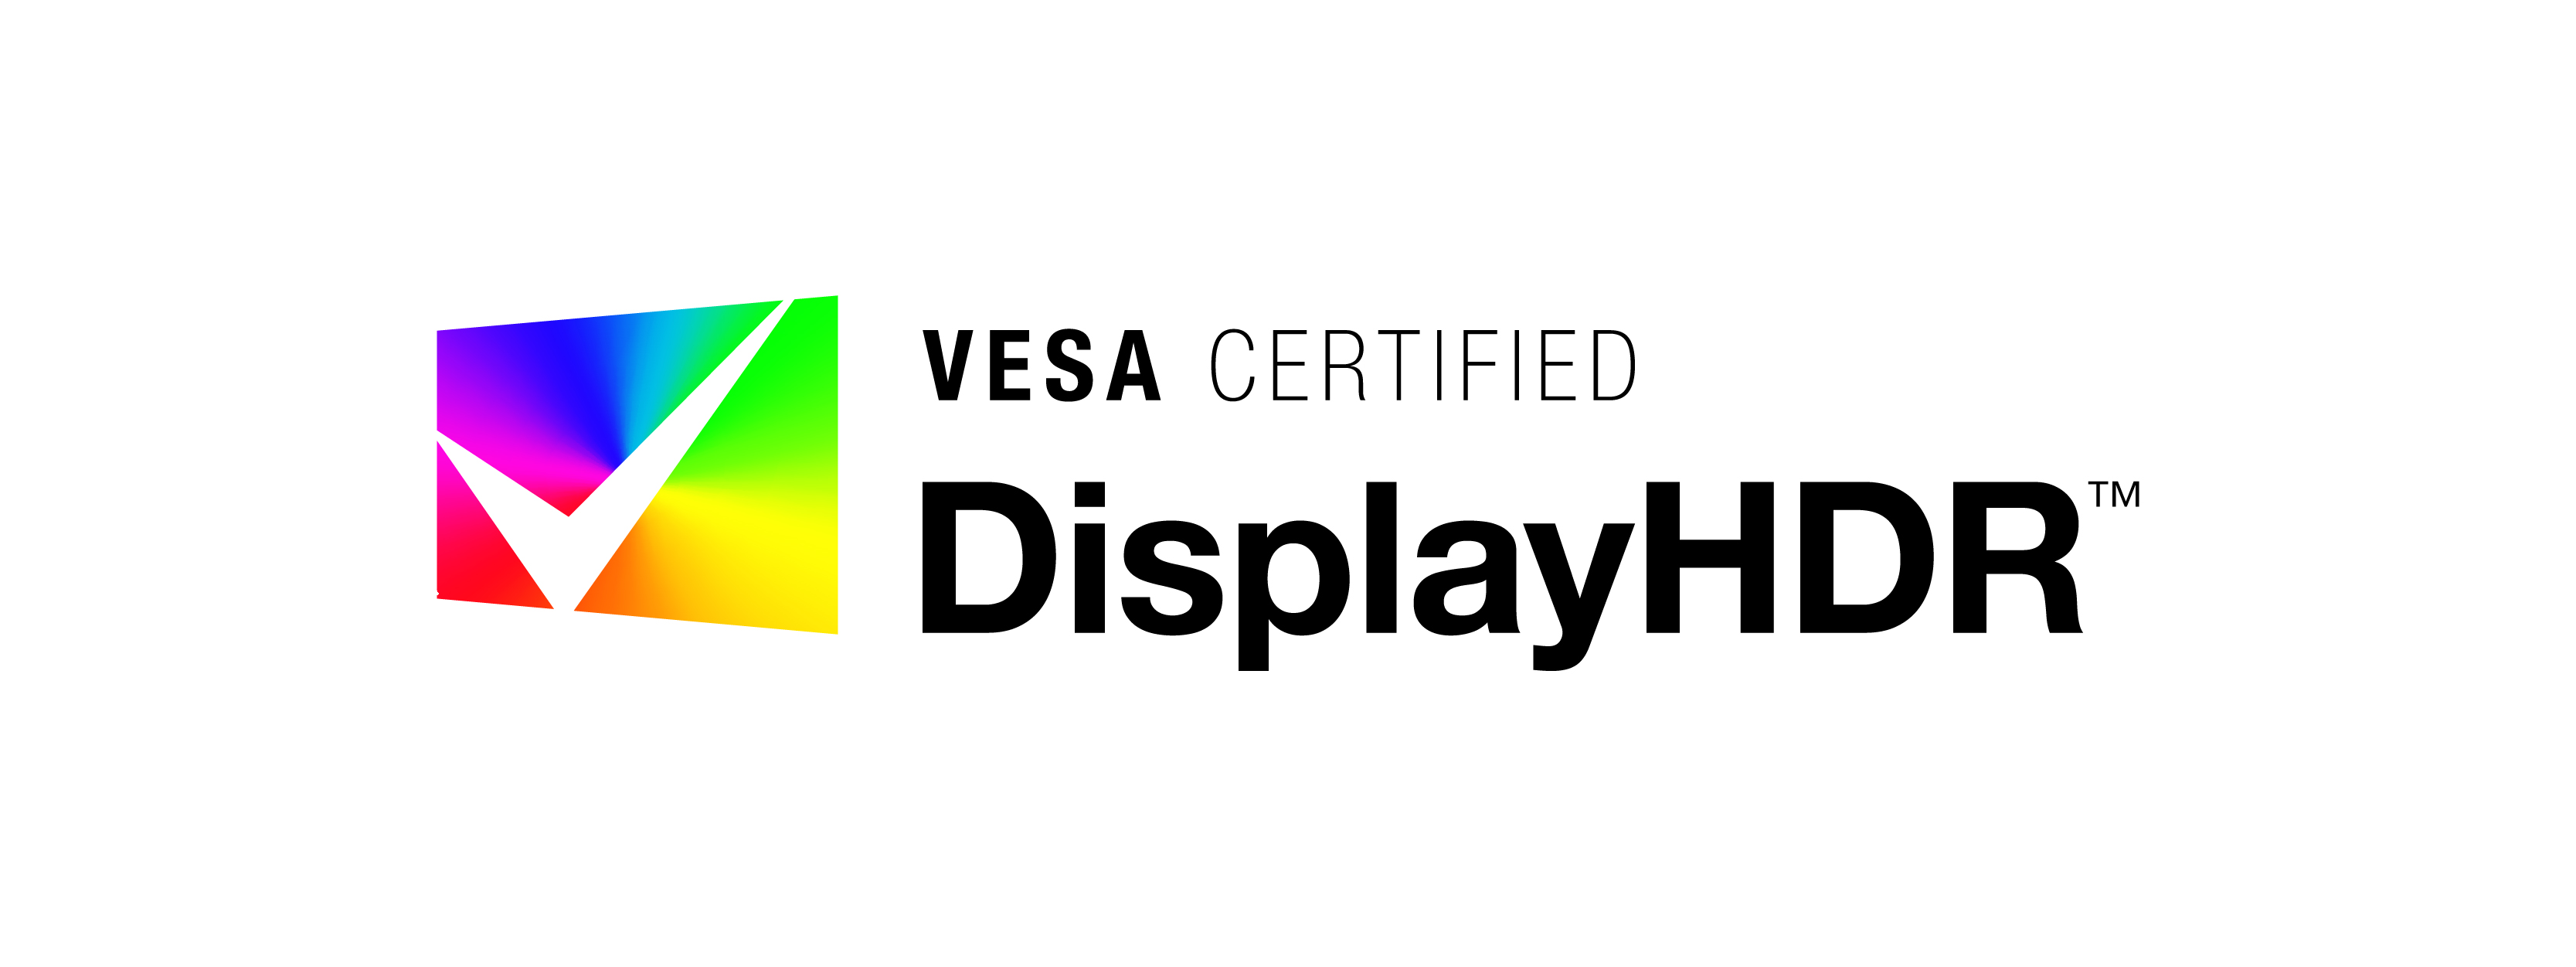 VESA Certified DisplayHDR 400 True Black